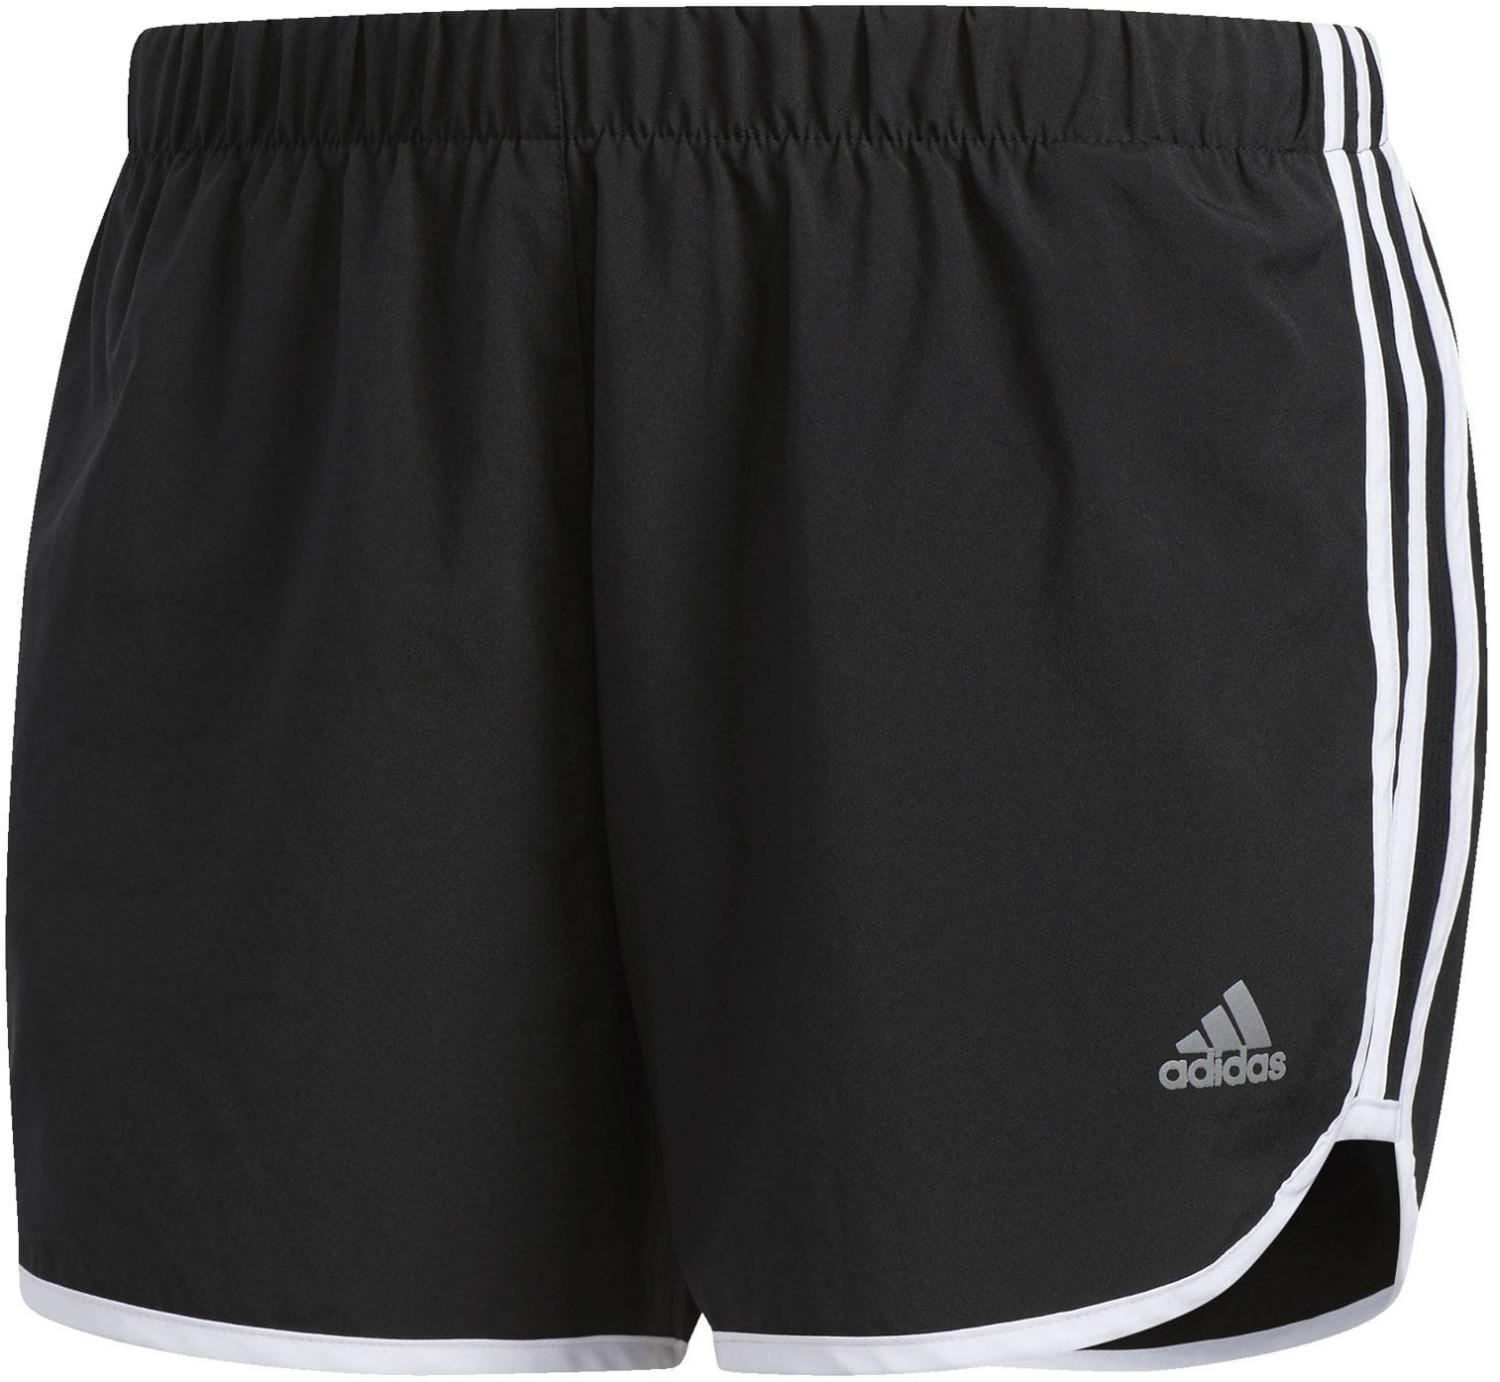 Adidas Marathon 20 Shorts black/white